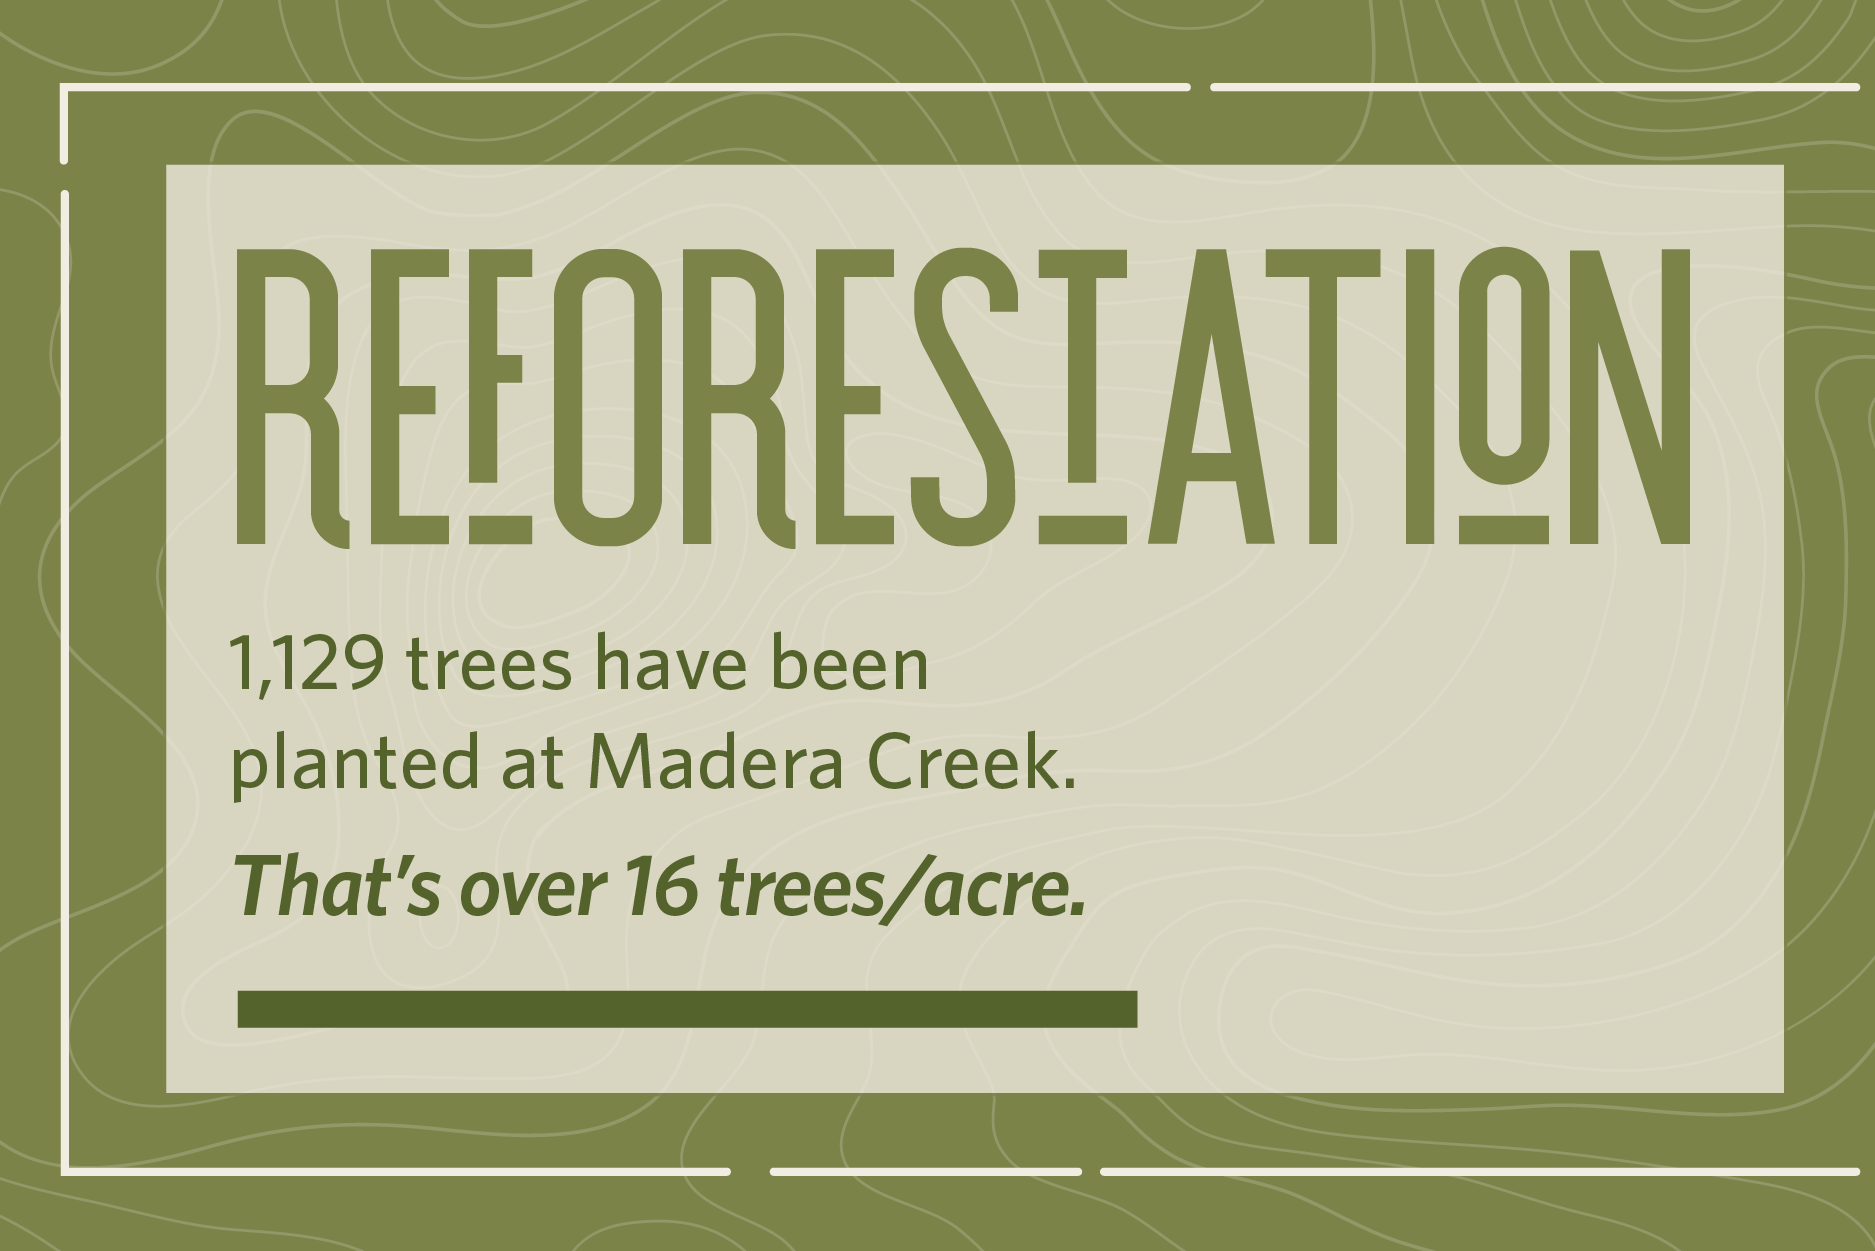 Reforestation